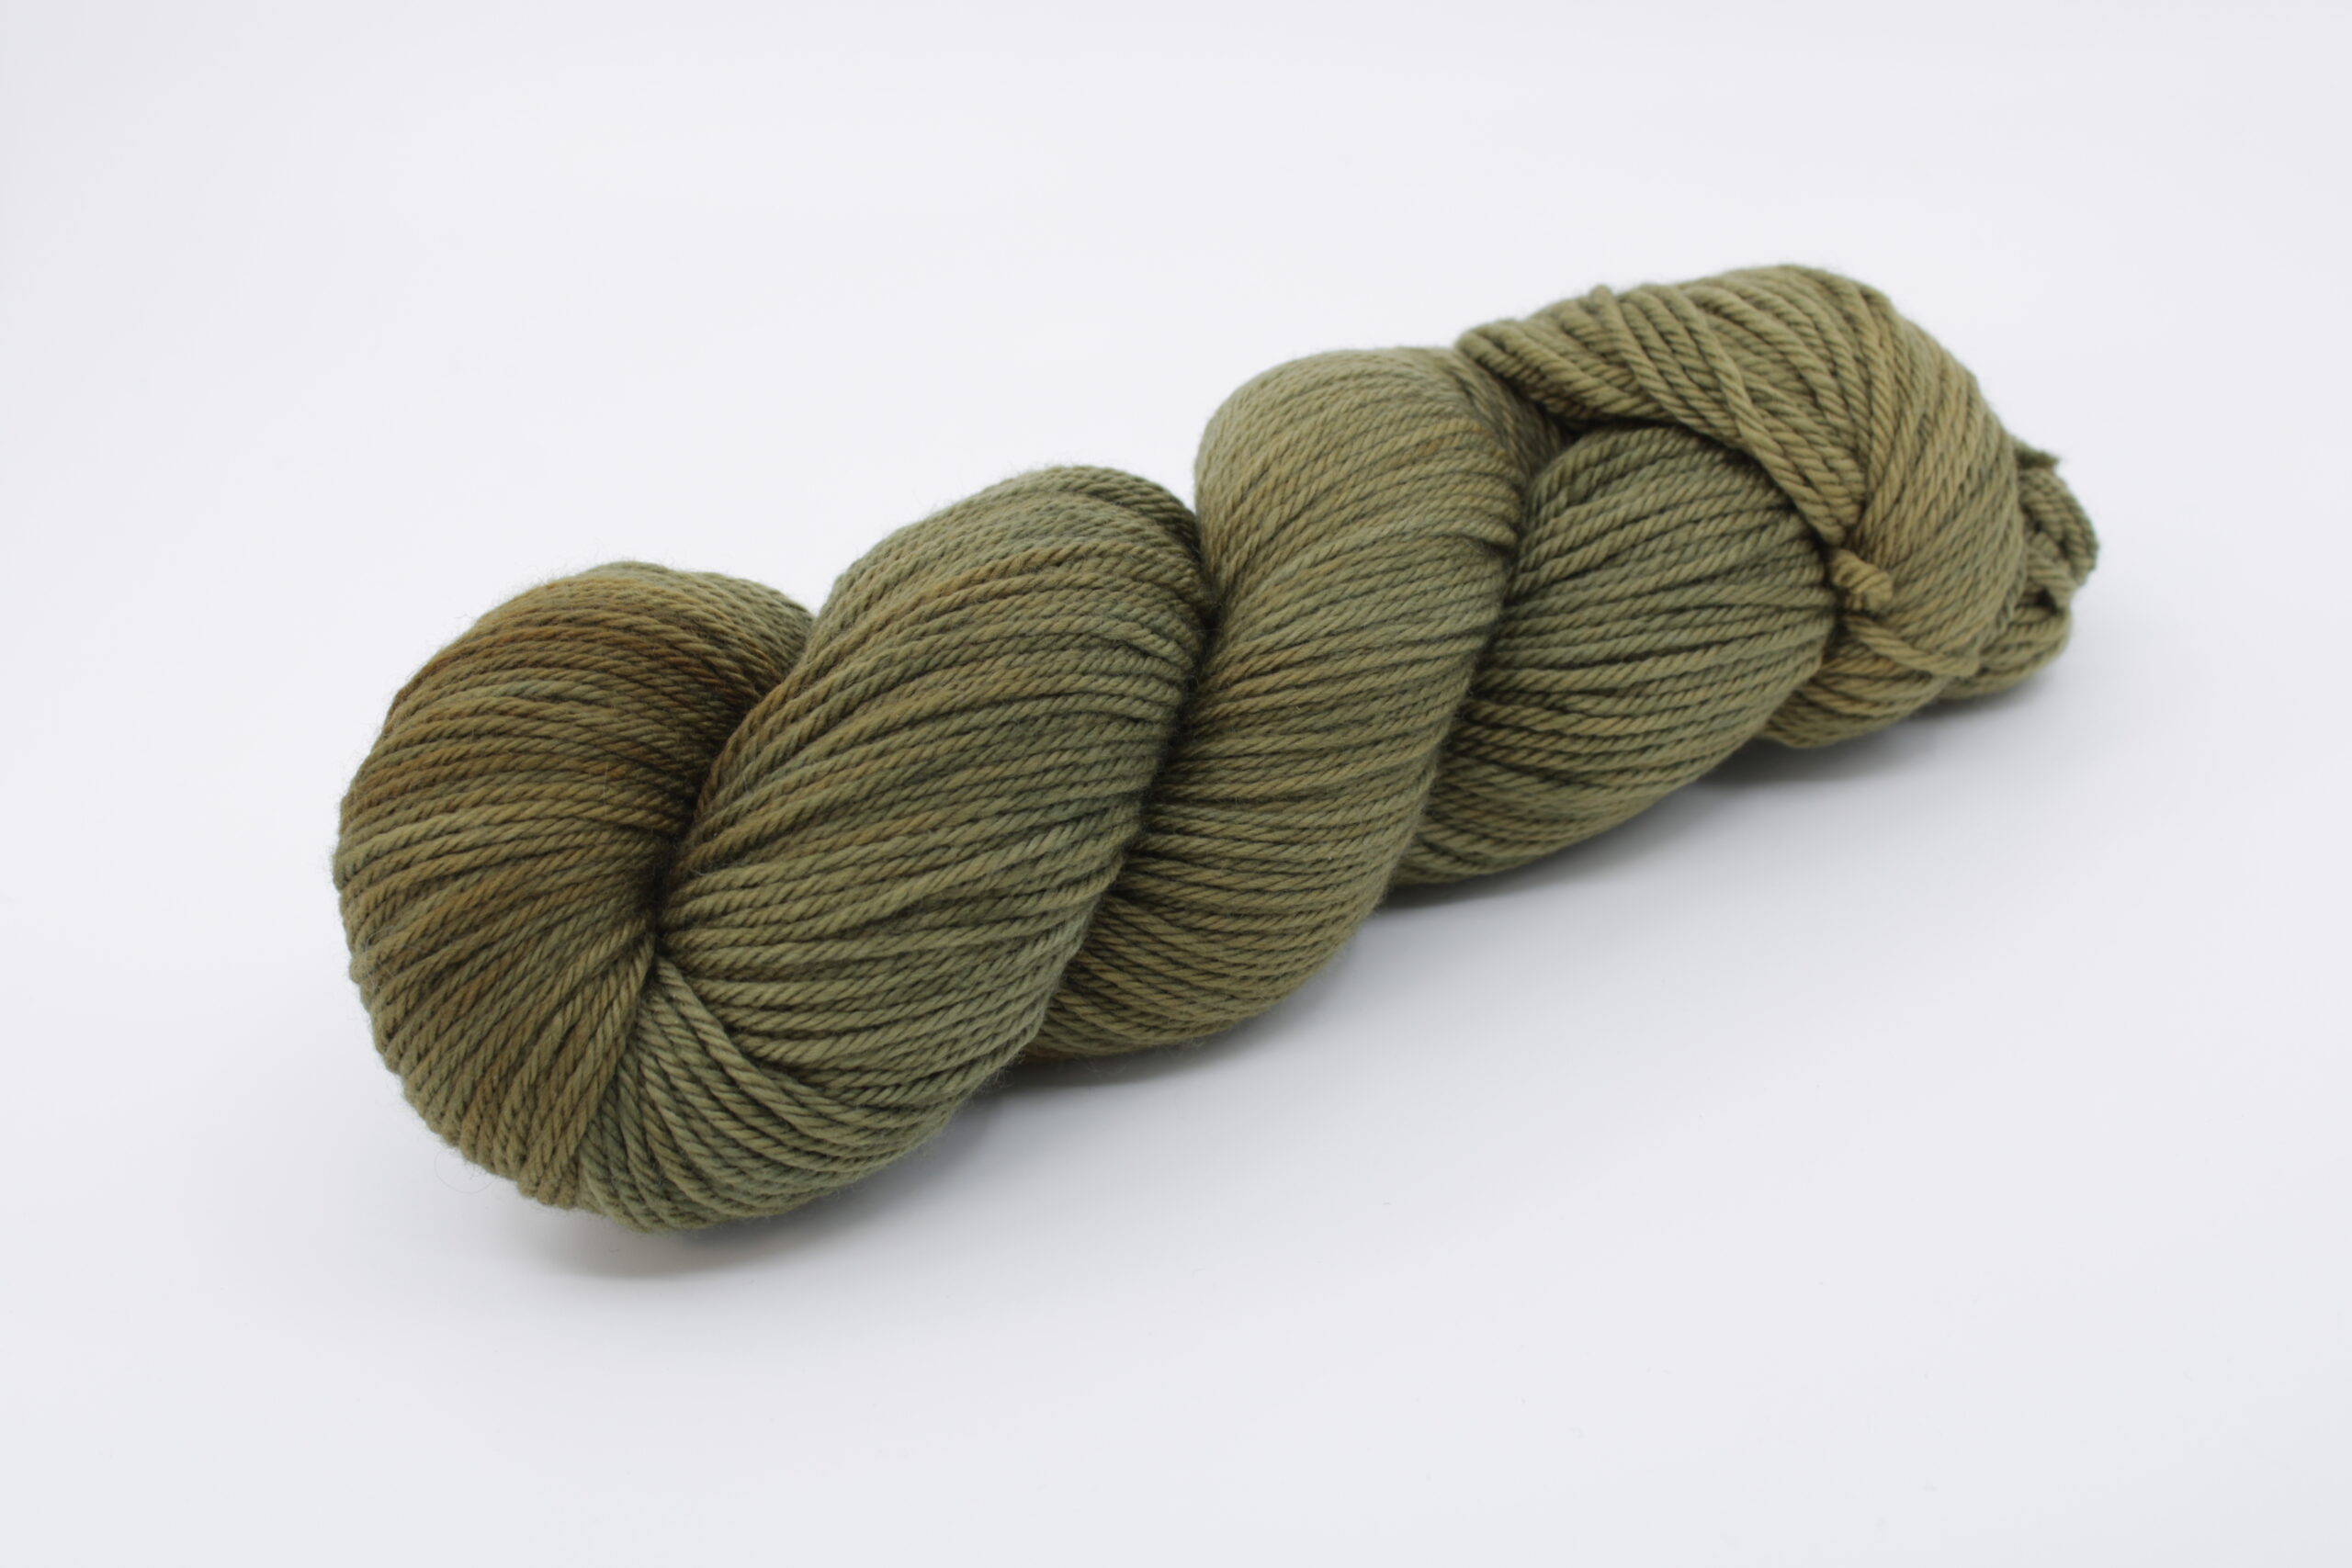 Fibrani wool, base: Flocon DK. 100% untreated merino wool, olive green color. Color: Olivia.